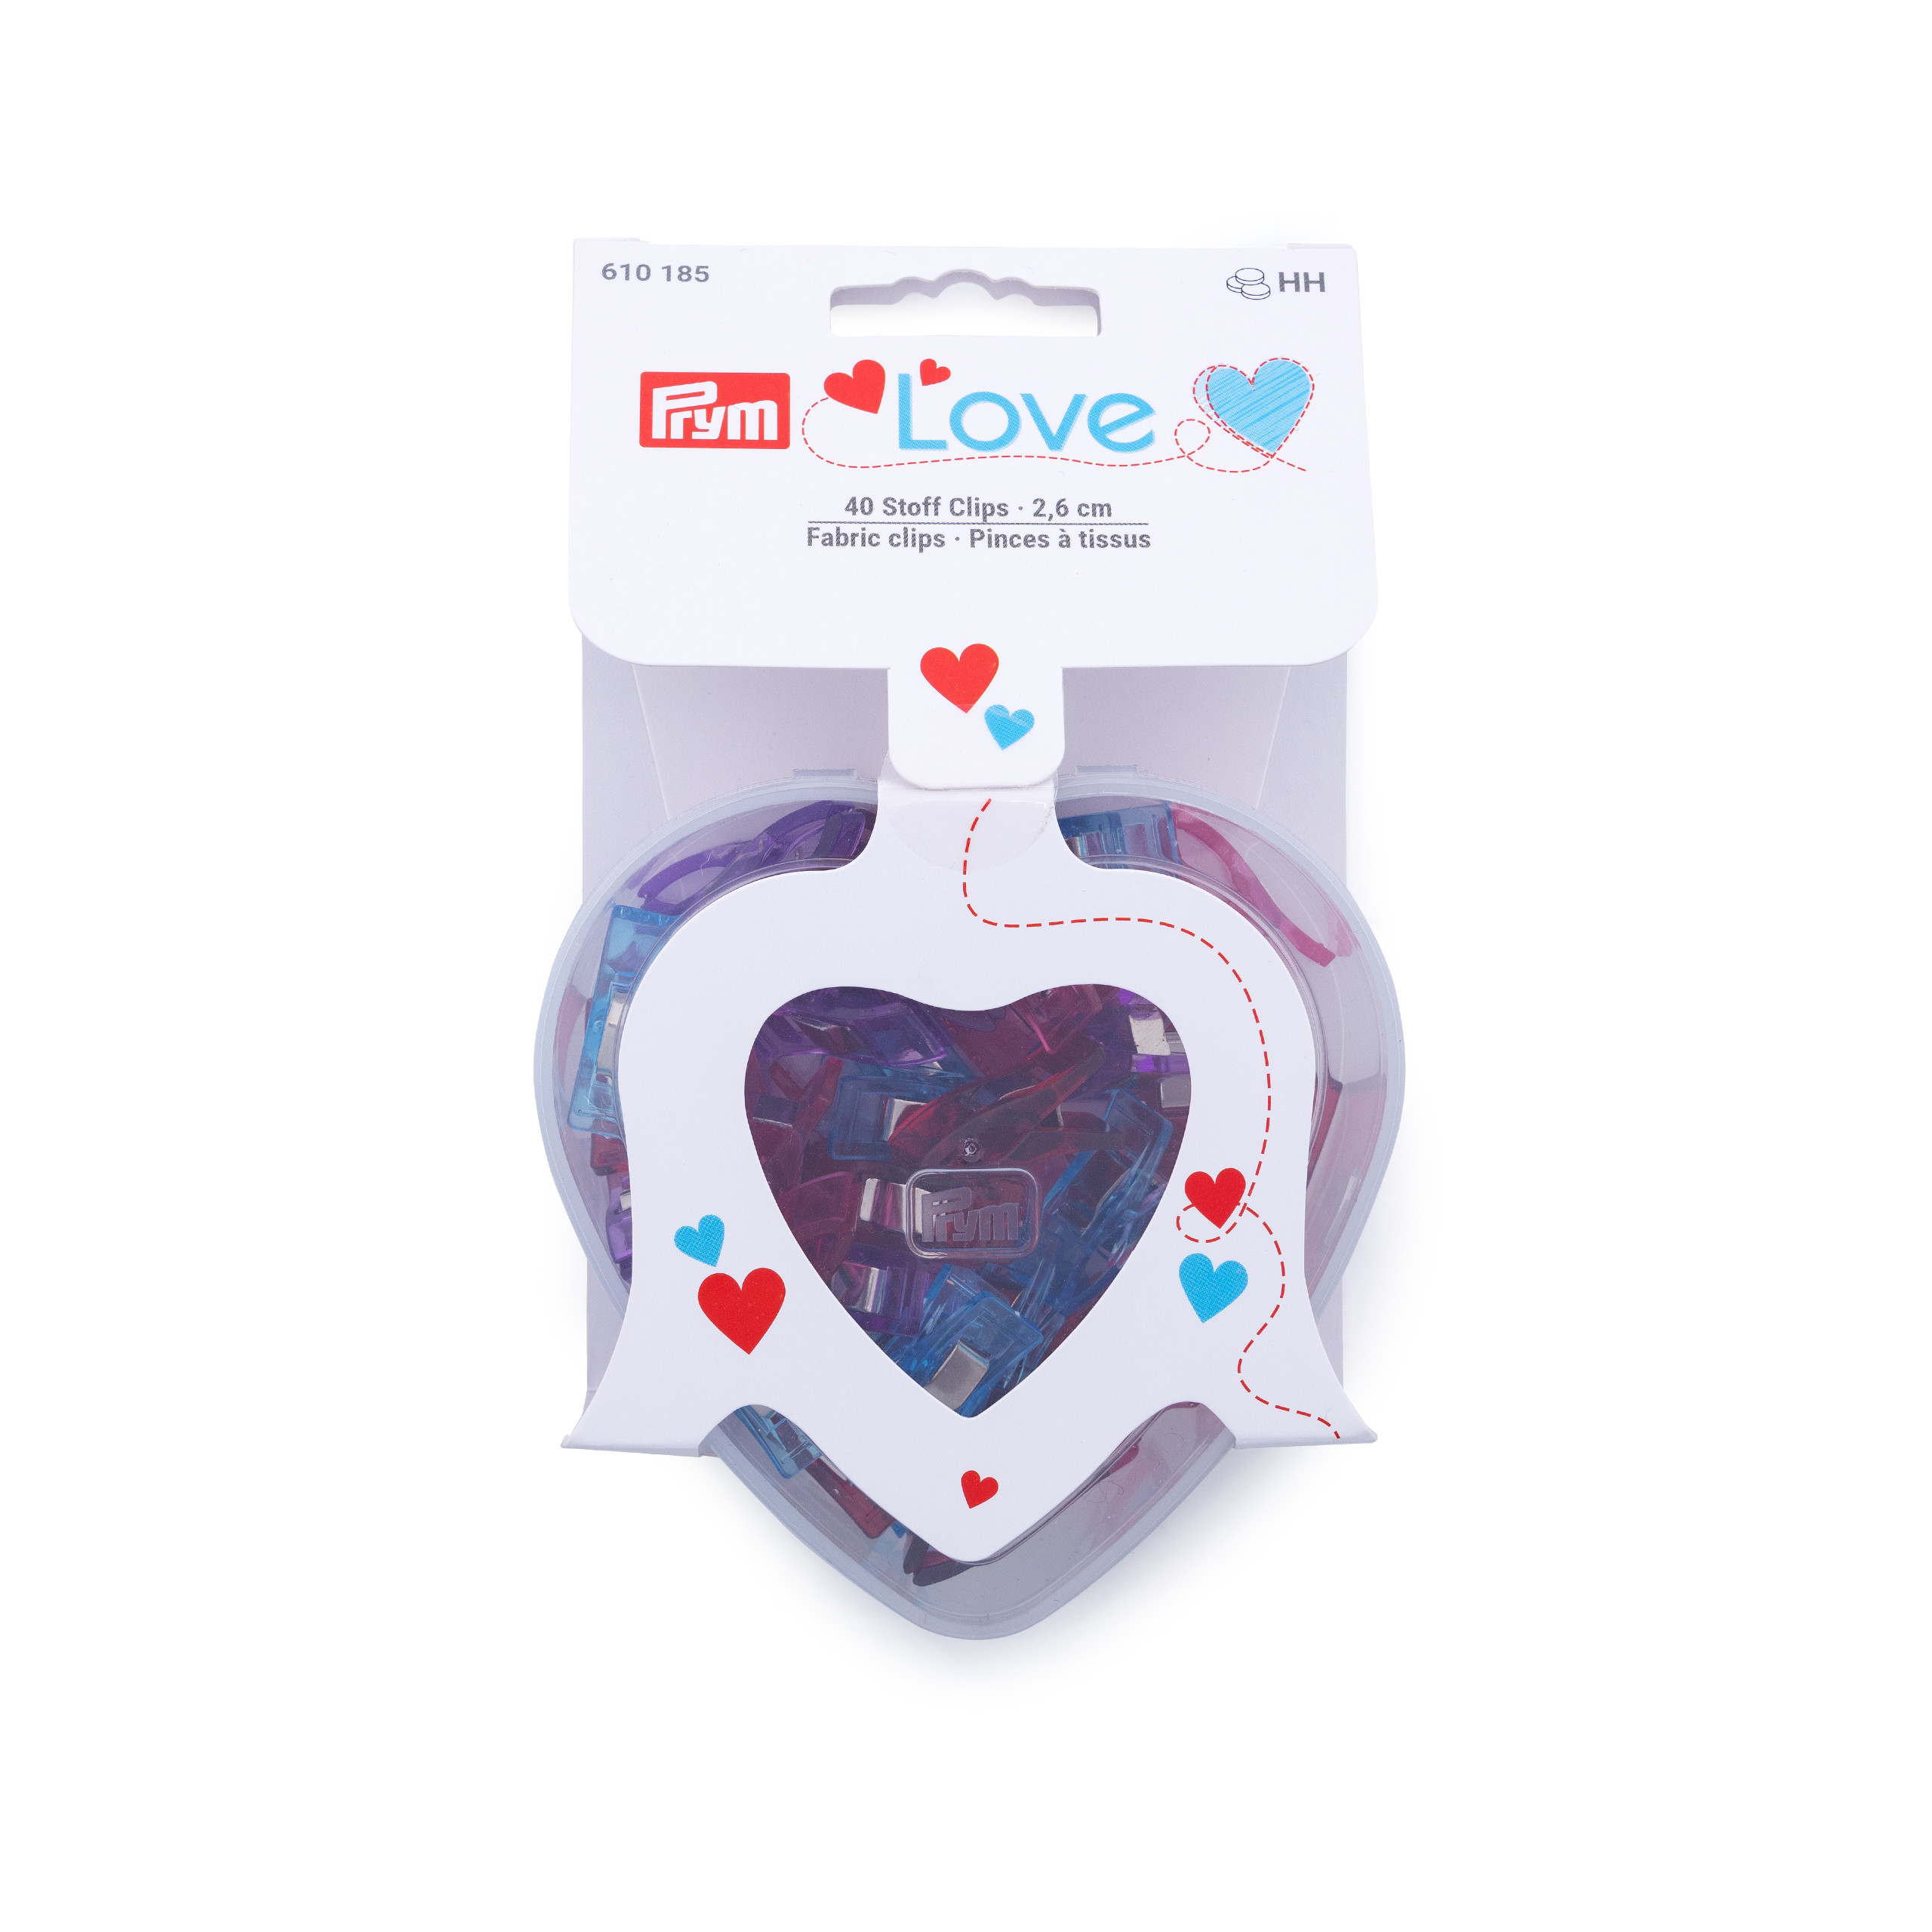  PRYM LOVE FABRIC CLIPS 2.6CM HEARTBOX